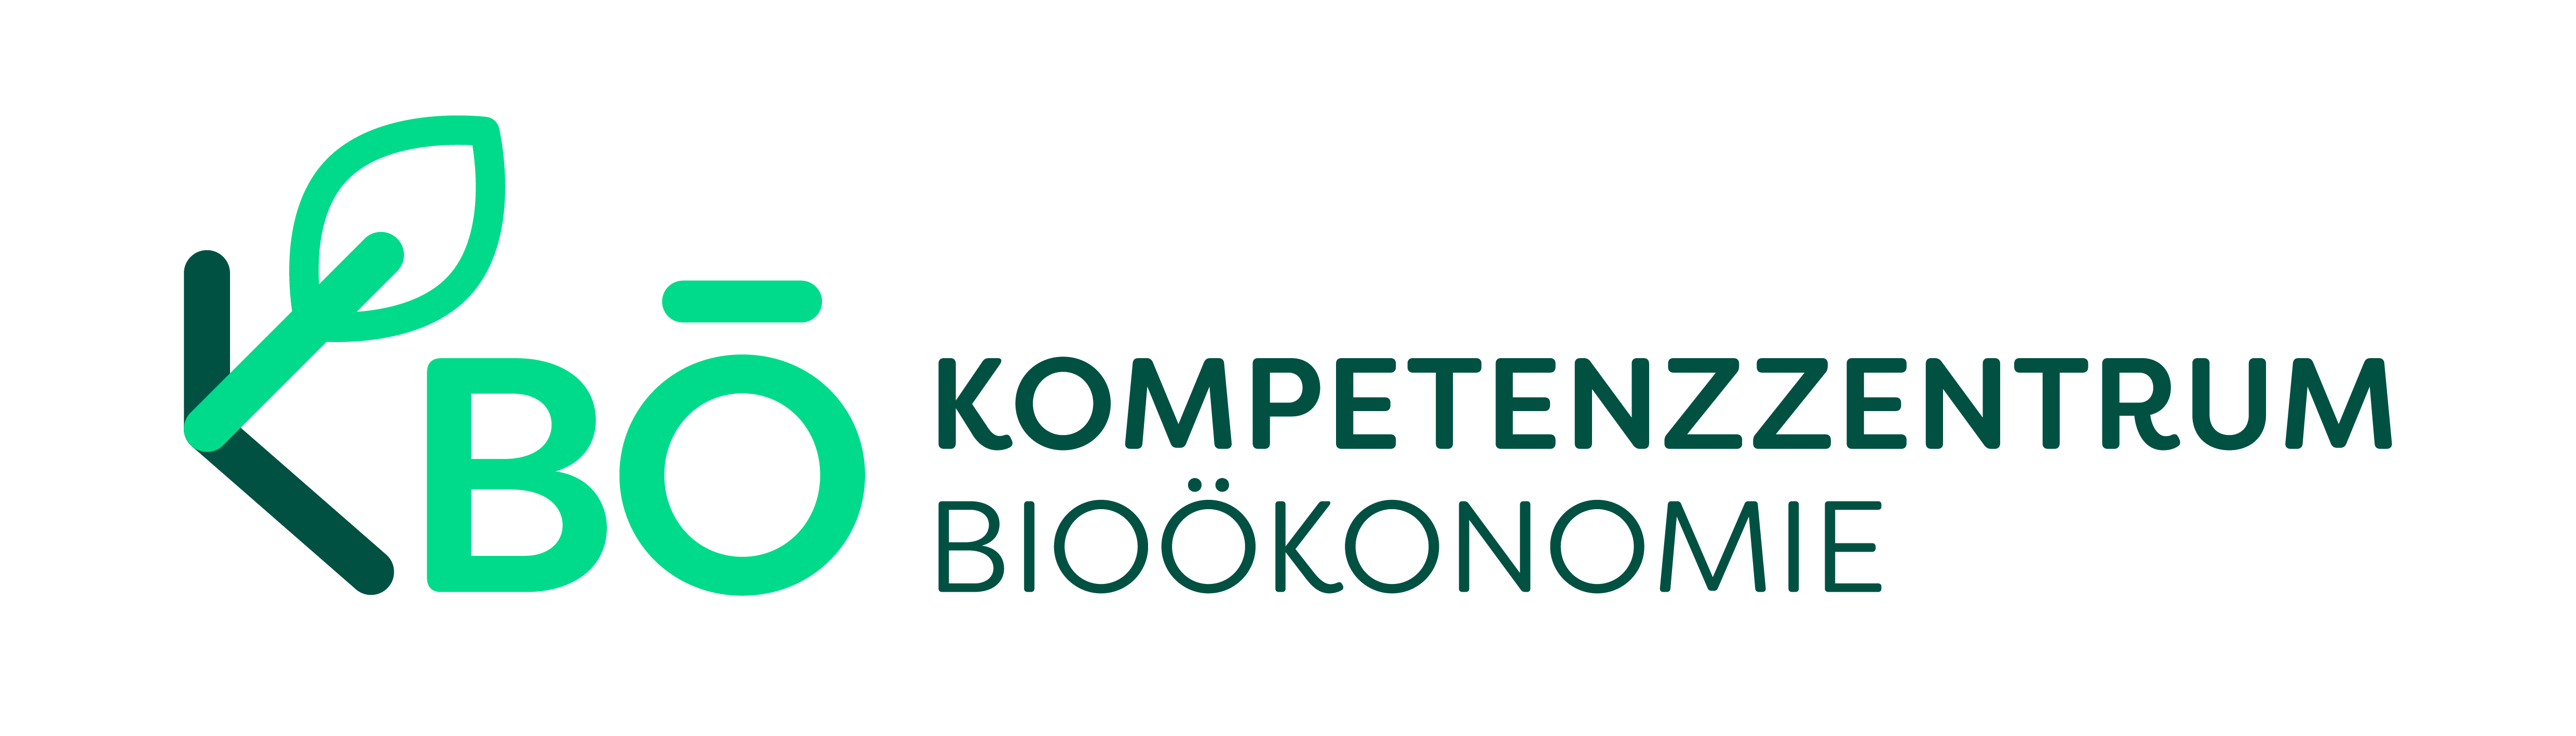 Kompetenzzentrum Bioökonomie Logo